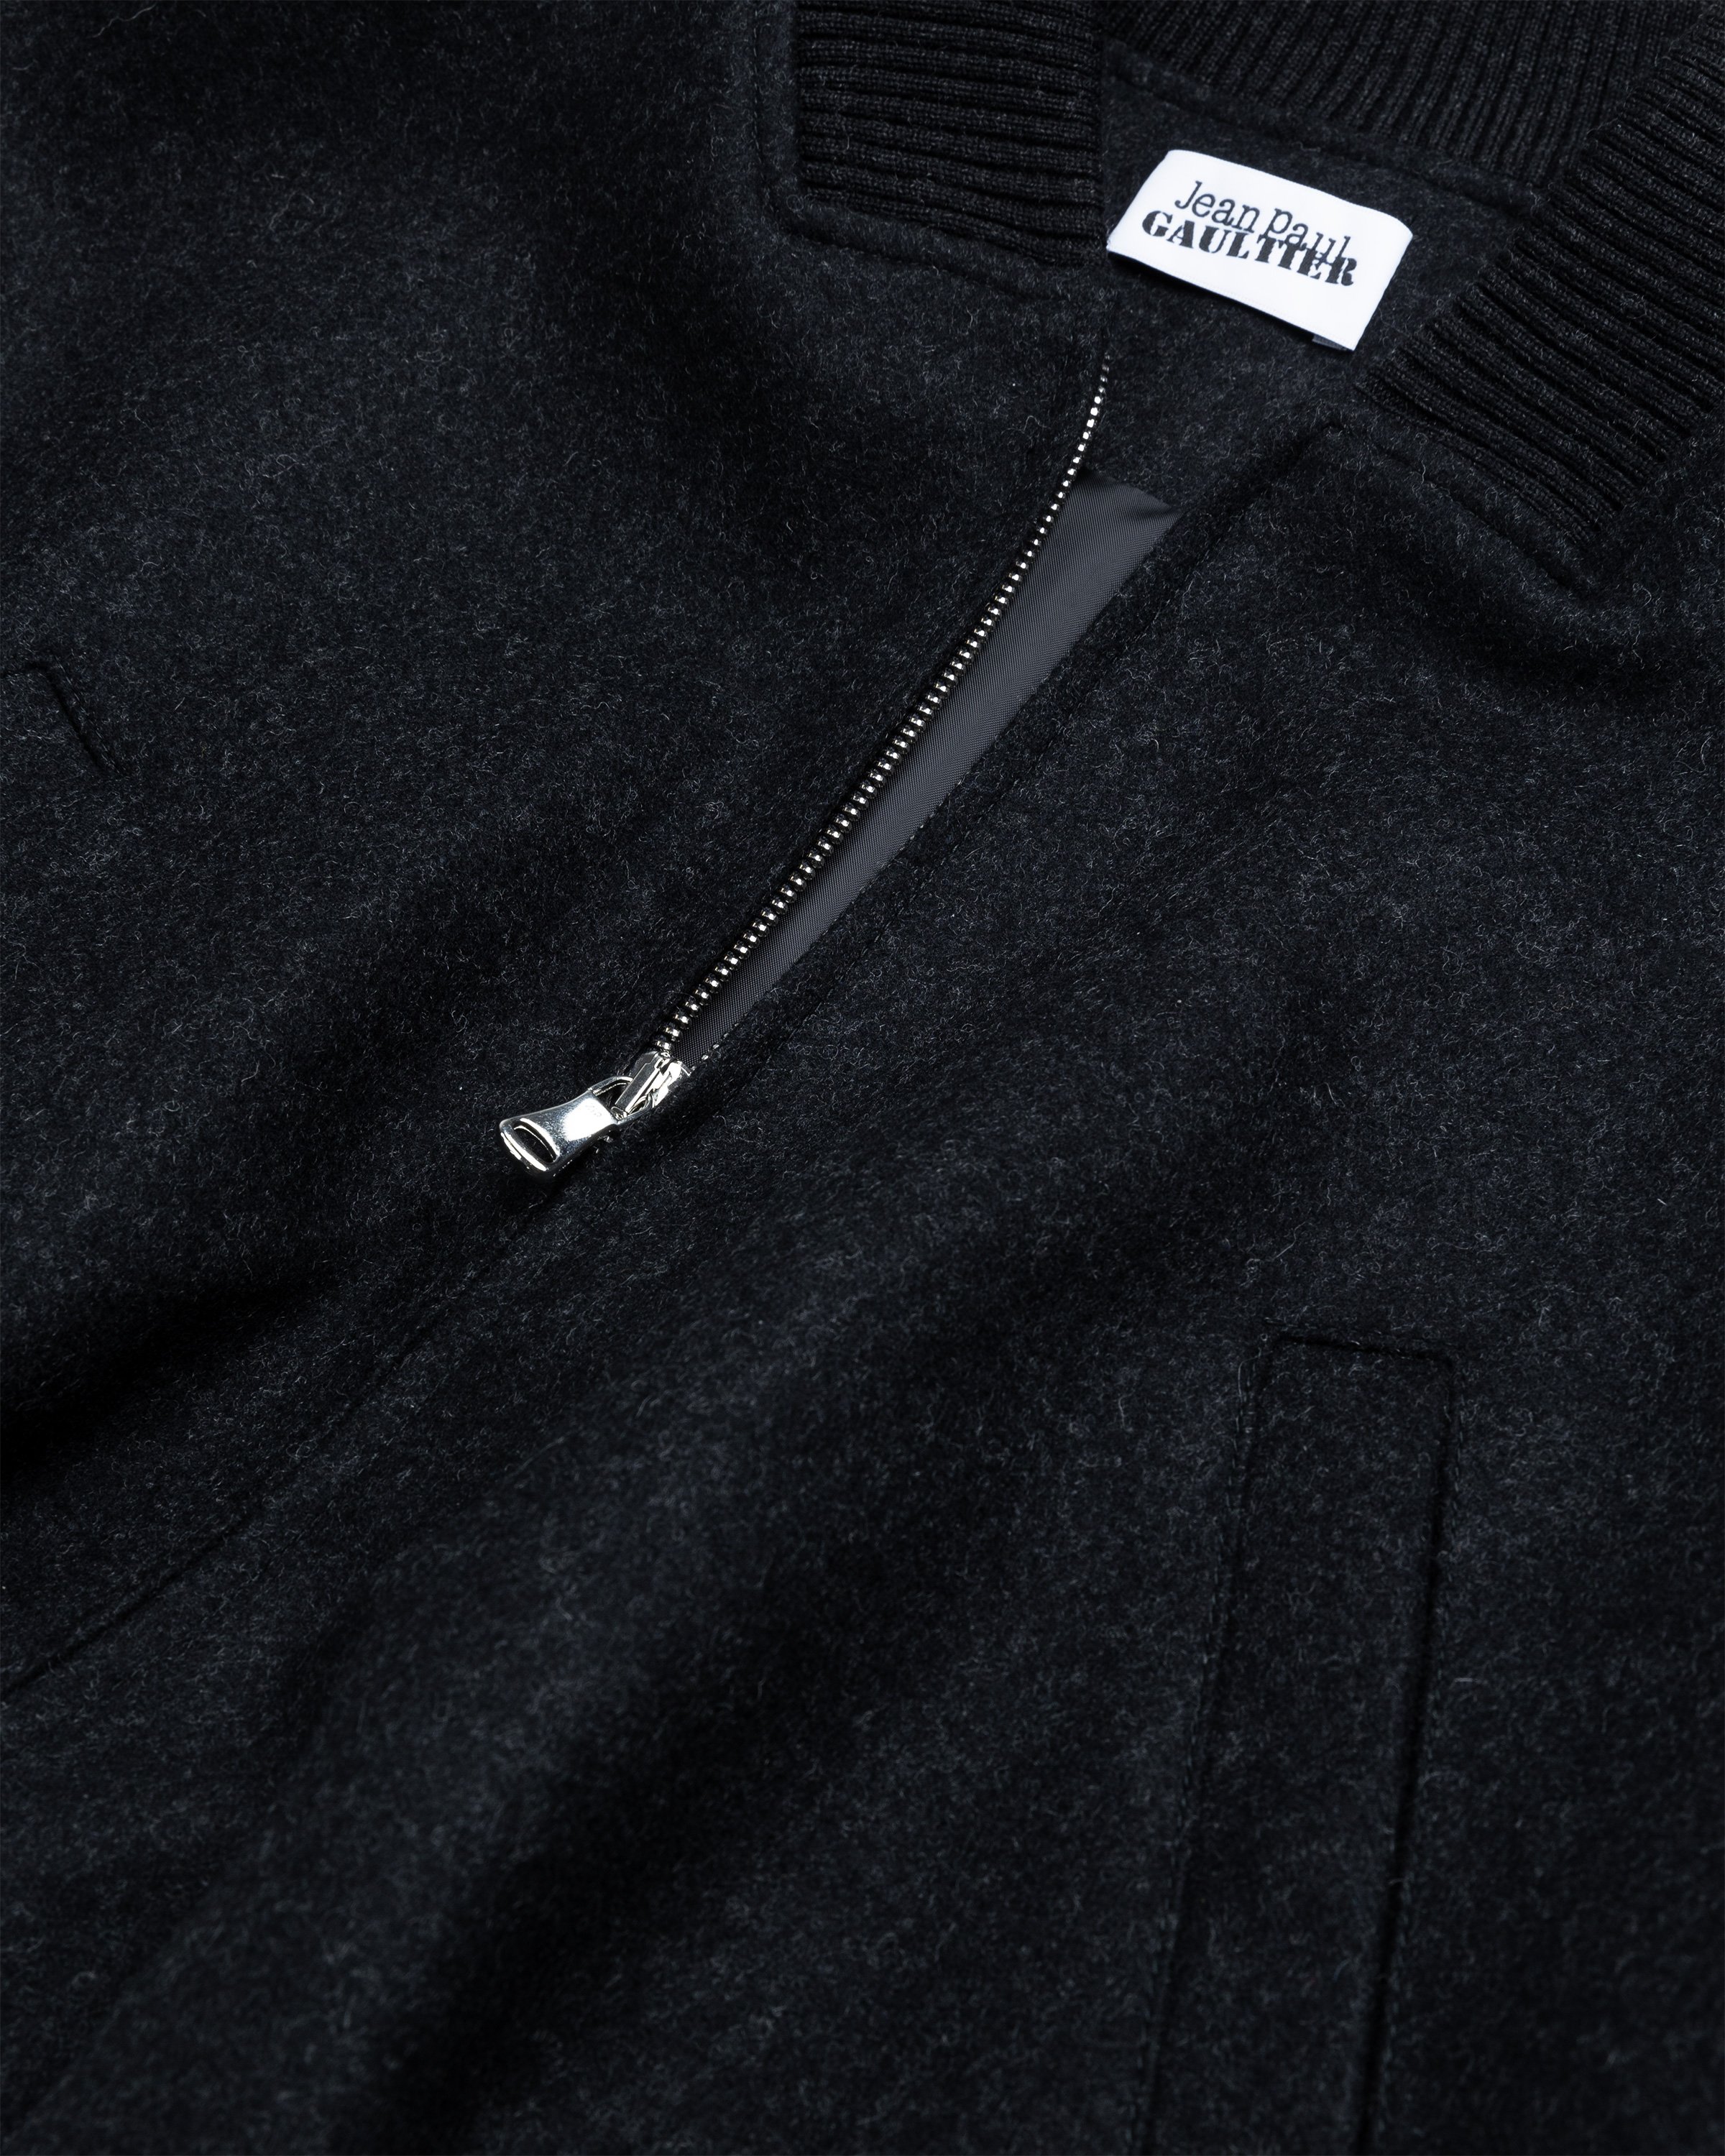 Jean Paul Gaultier - Bomber Jacket - Clothing - Grey - Image 7